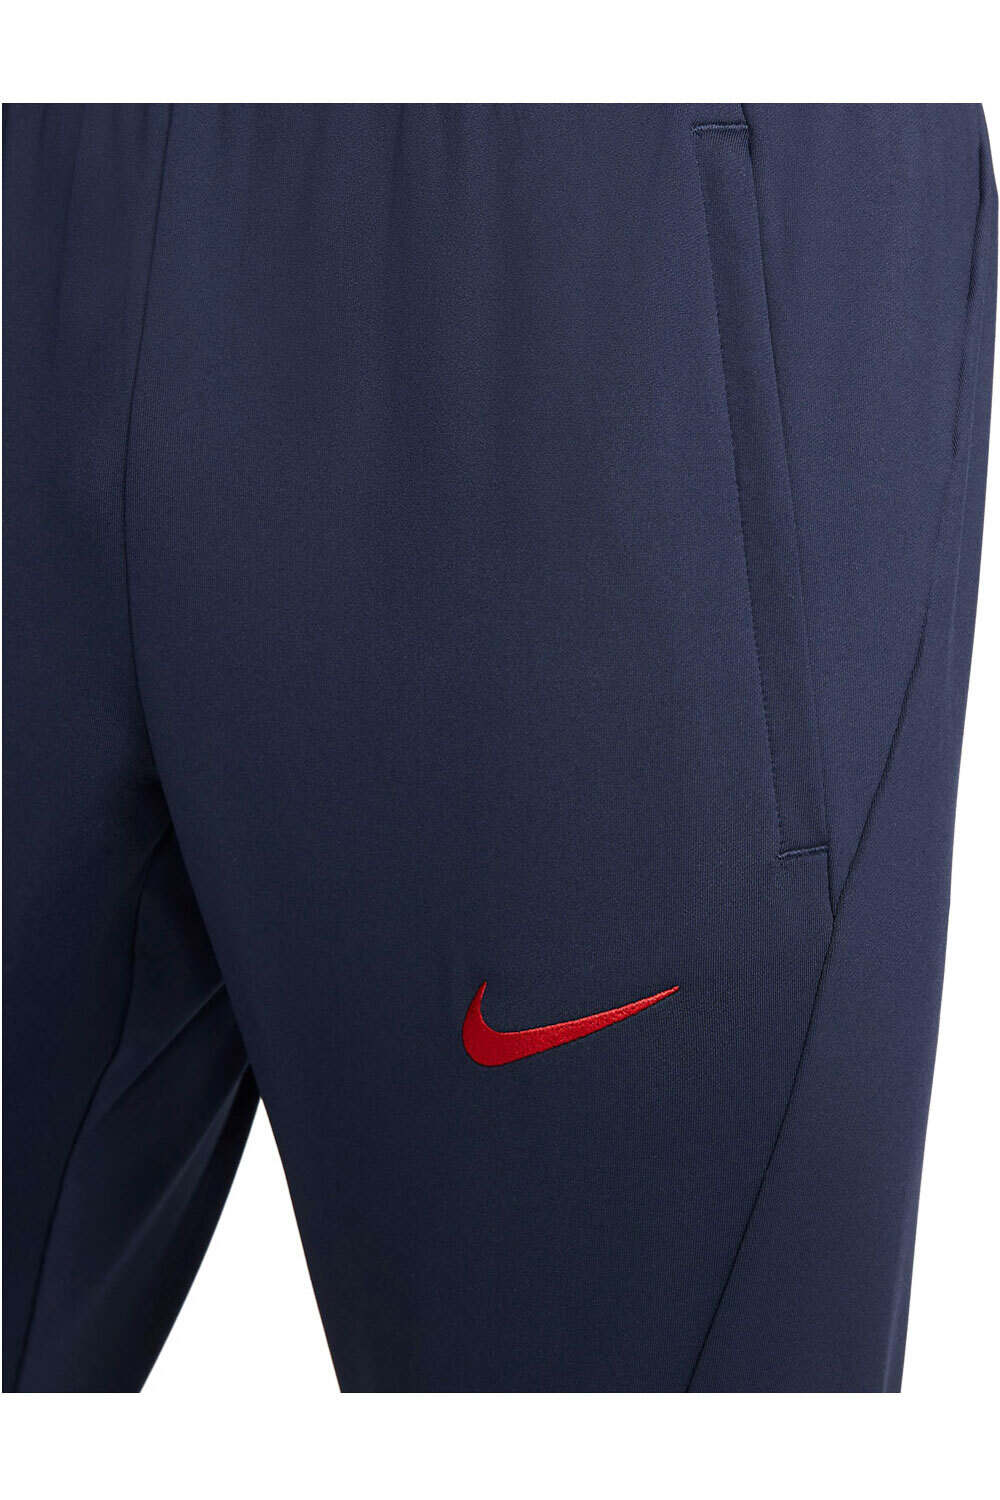 Nike pantalones largos futbol BARCELONA 23 STRIKE 03